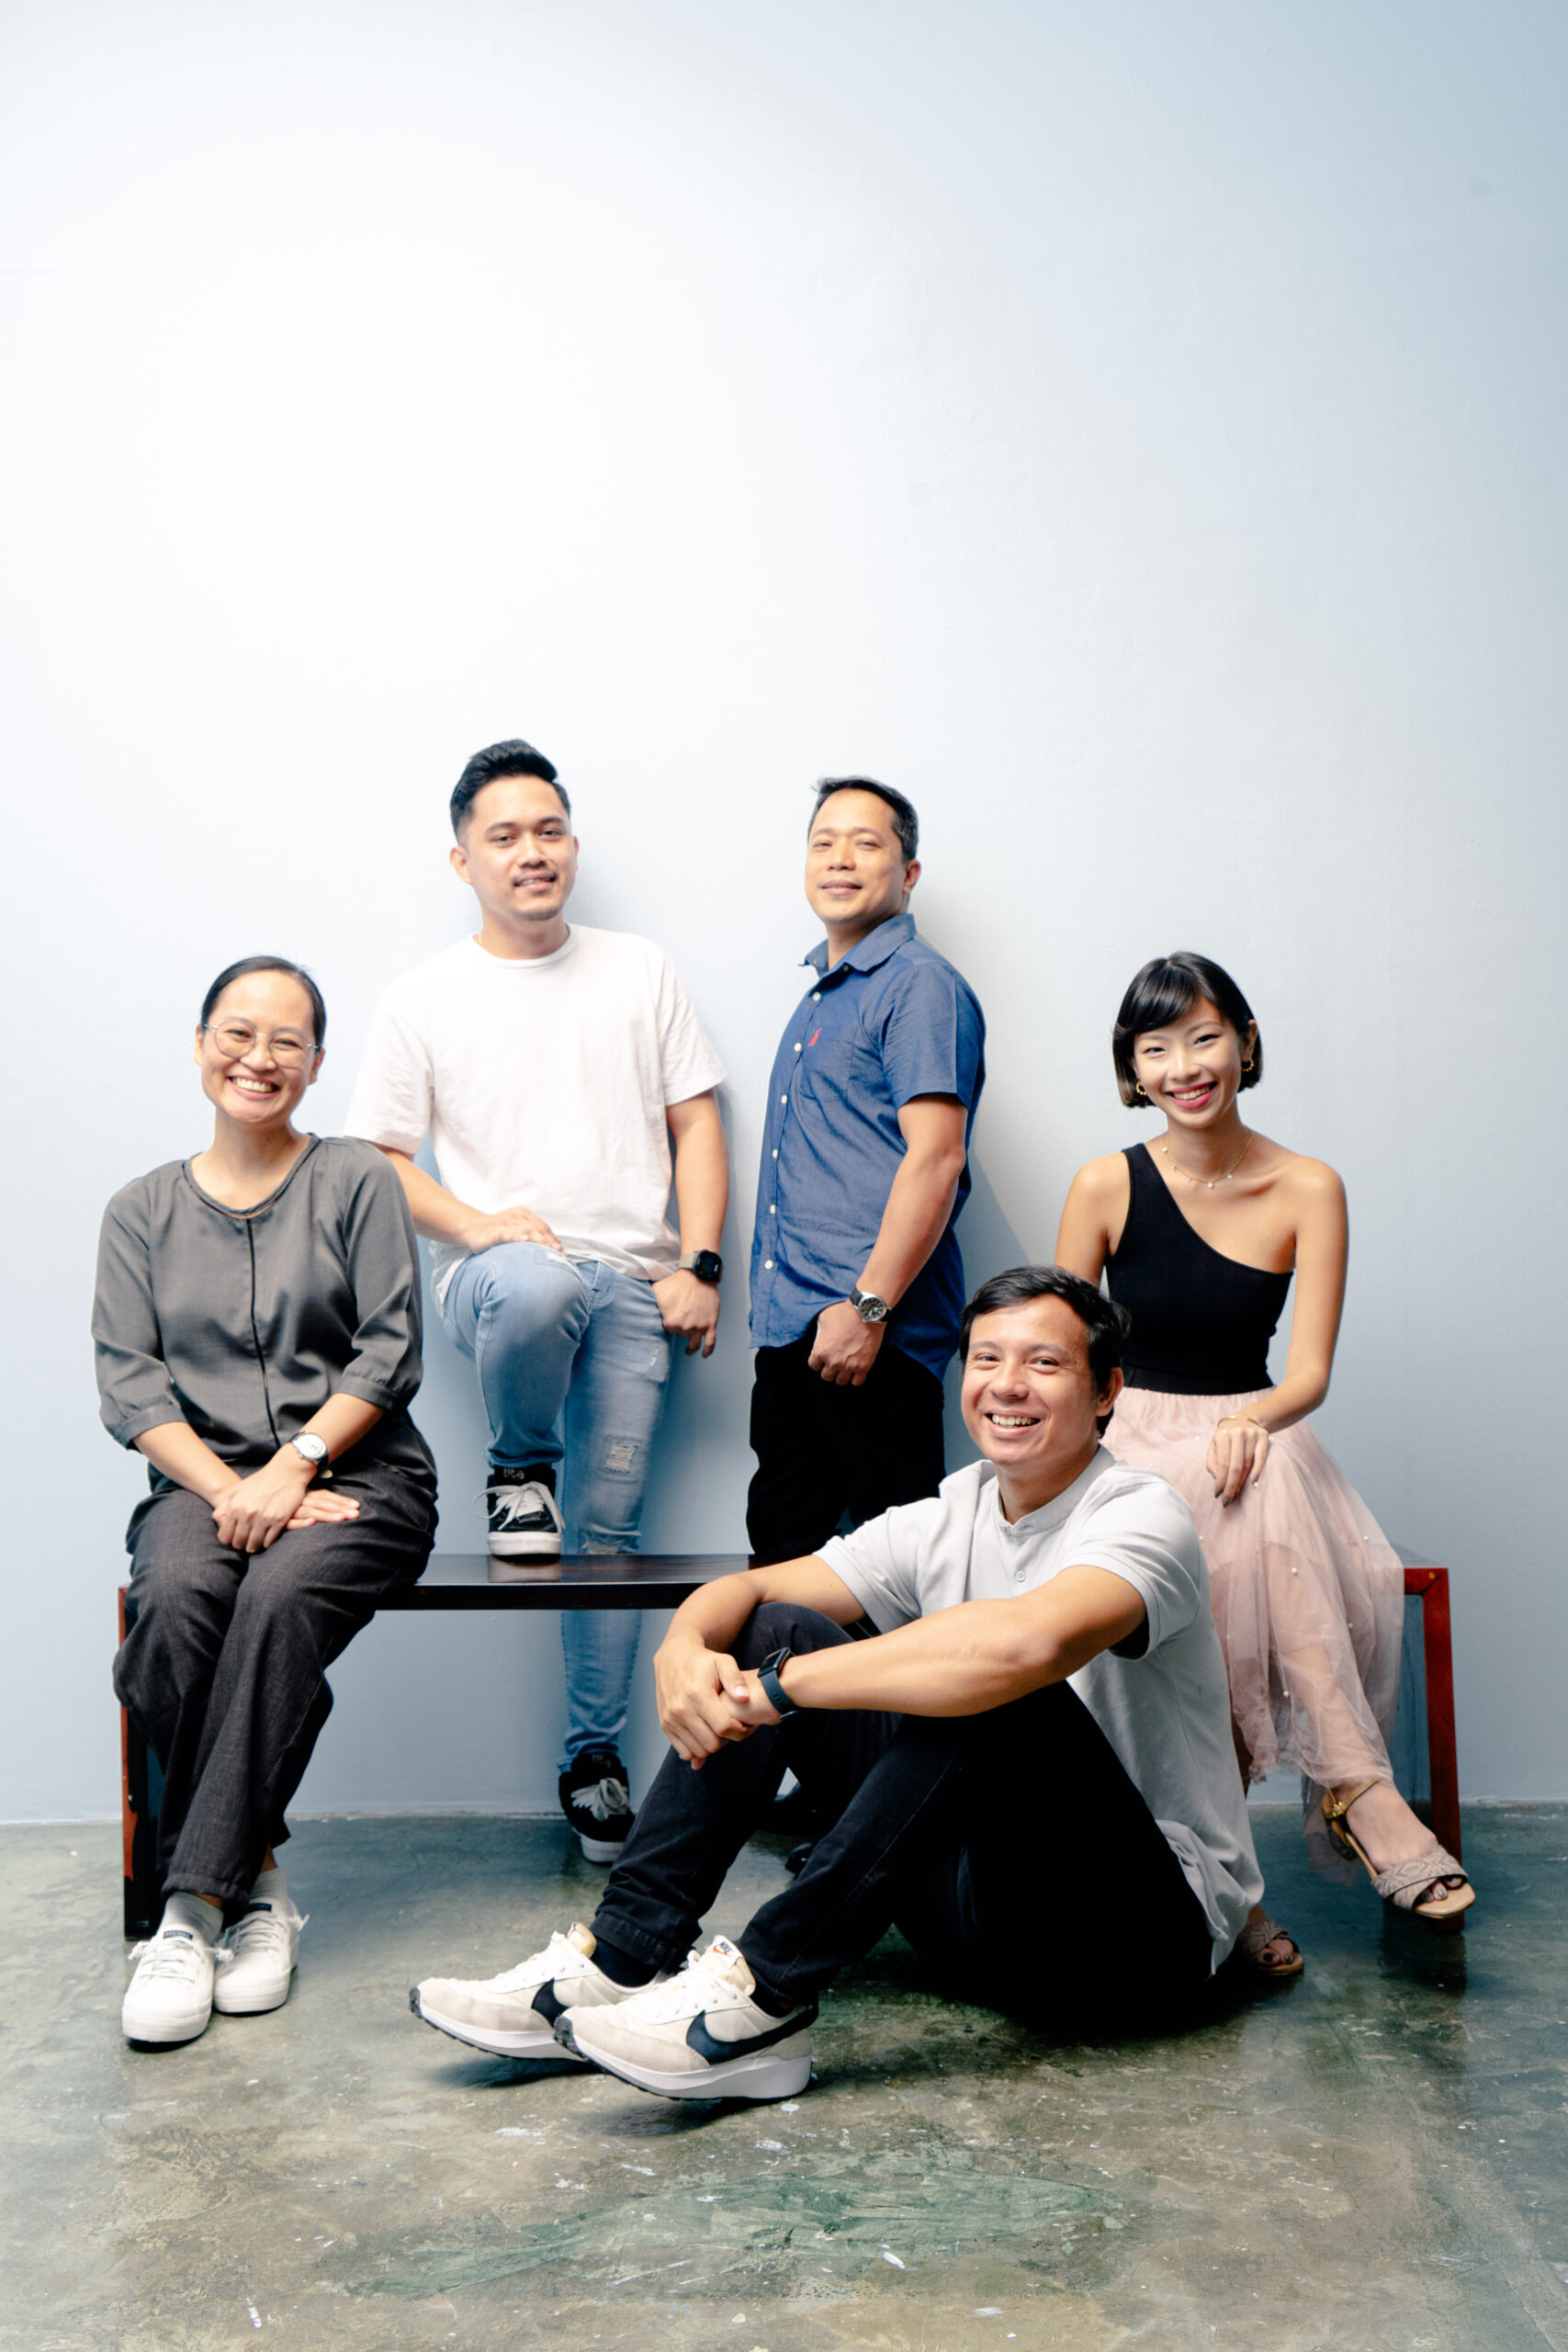 Filipino artists Venice Biennial